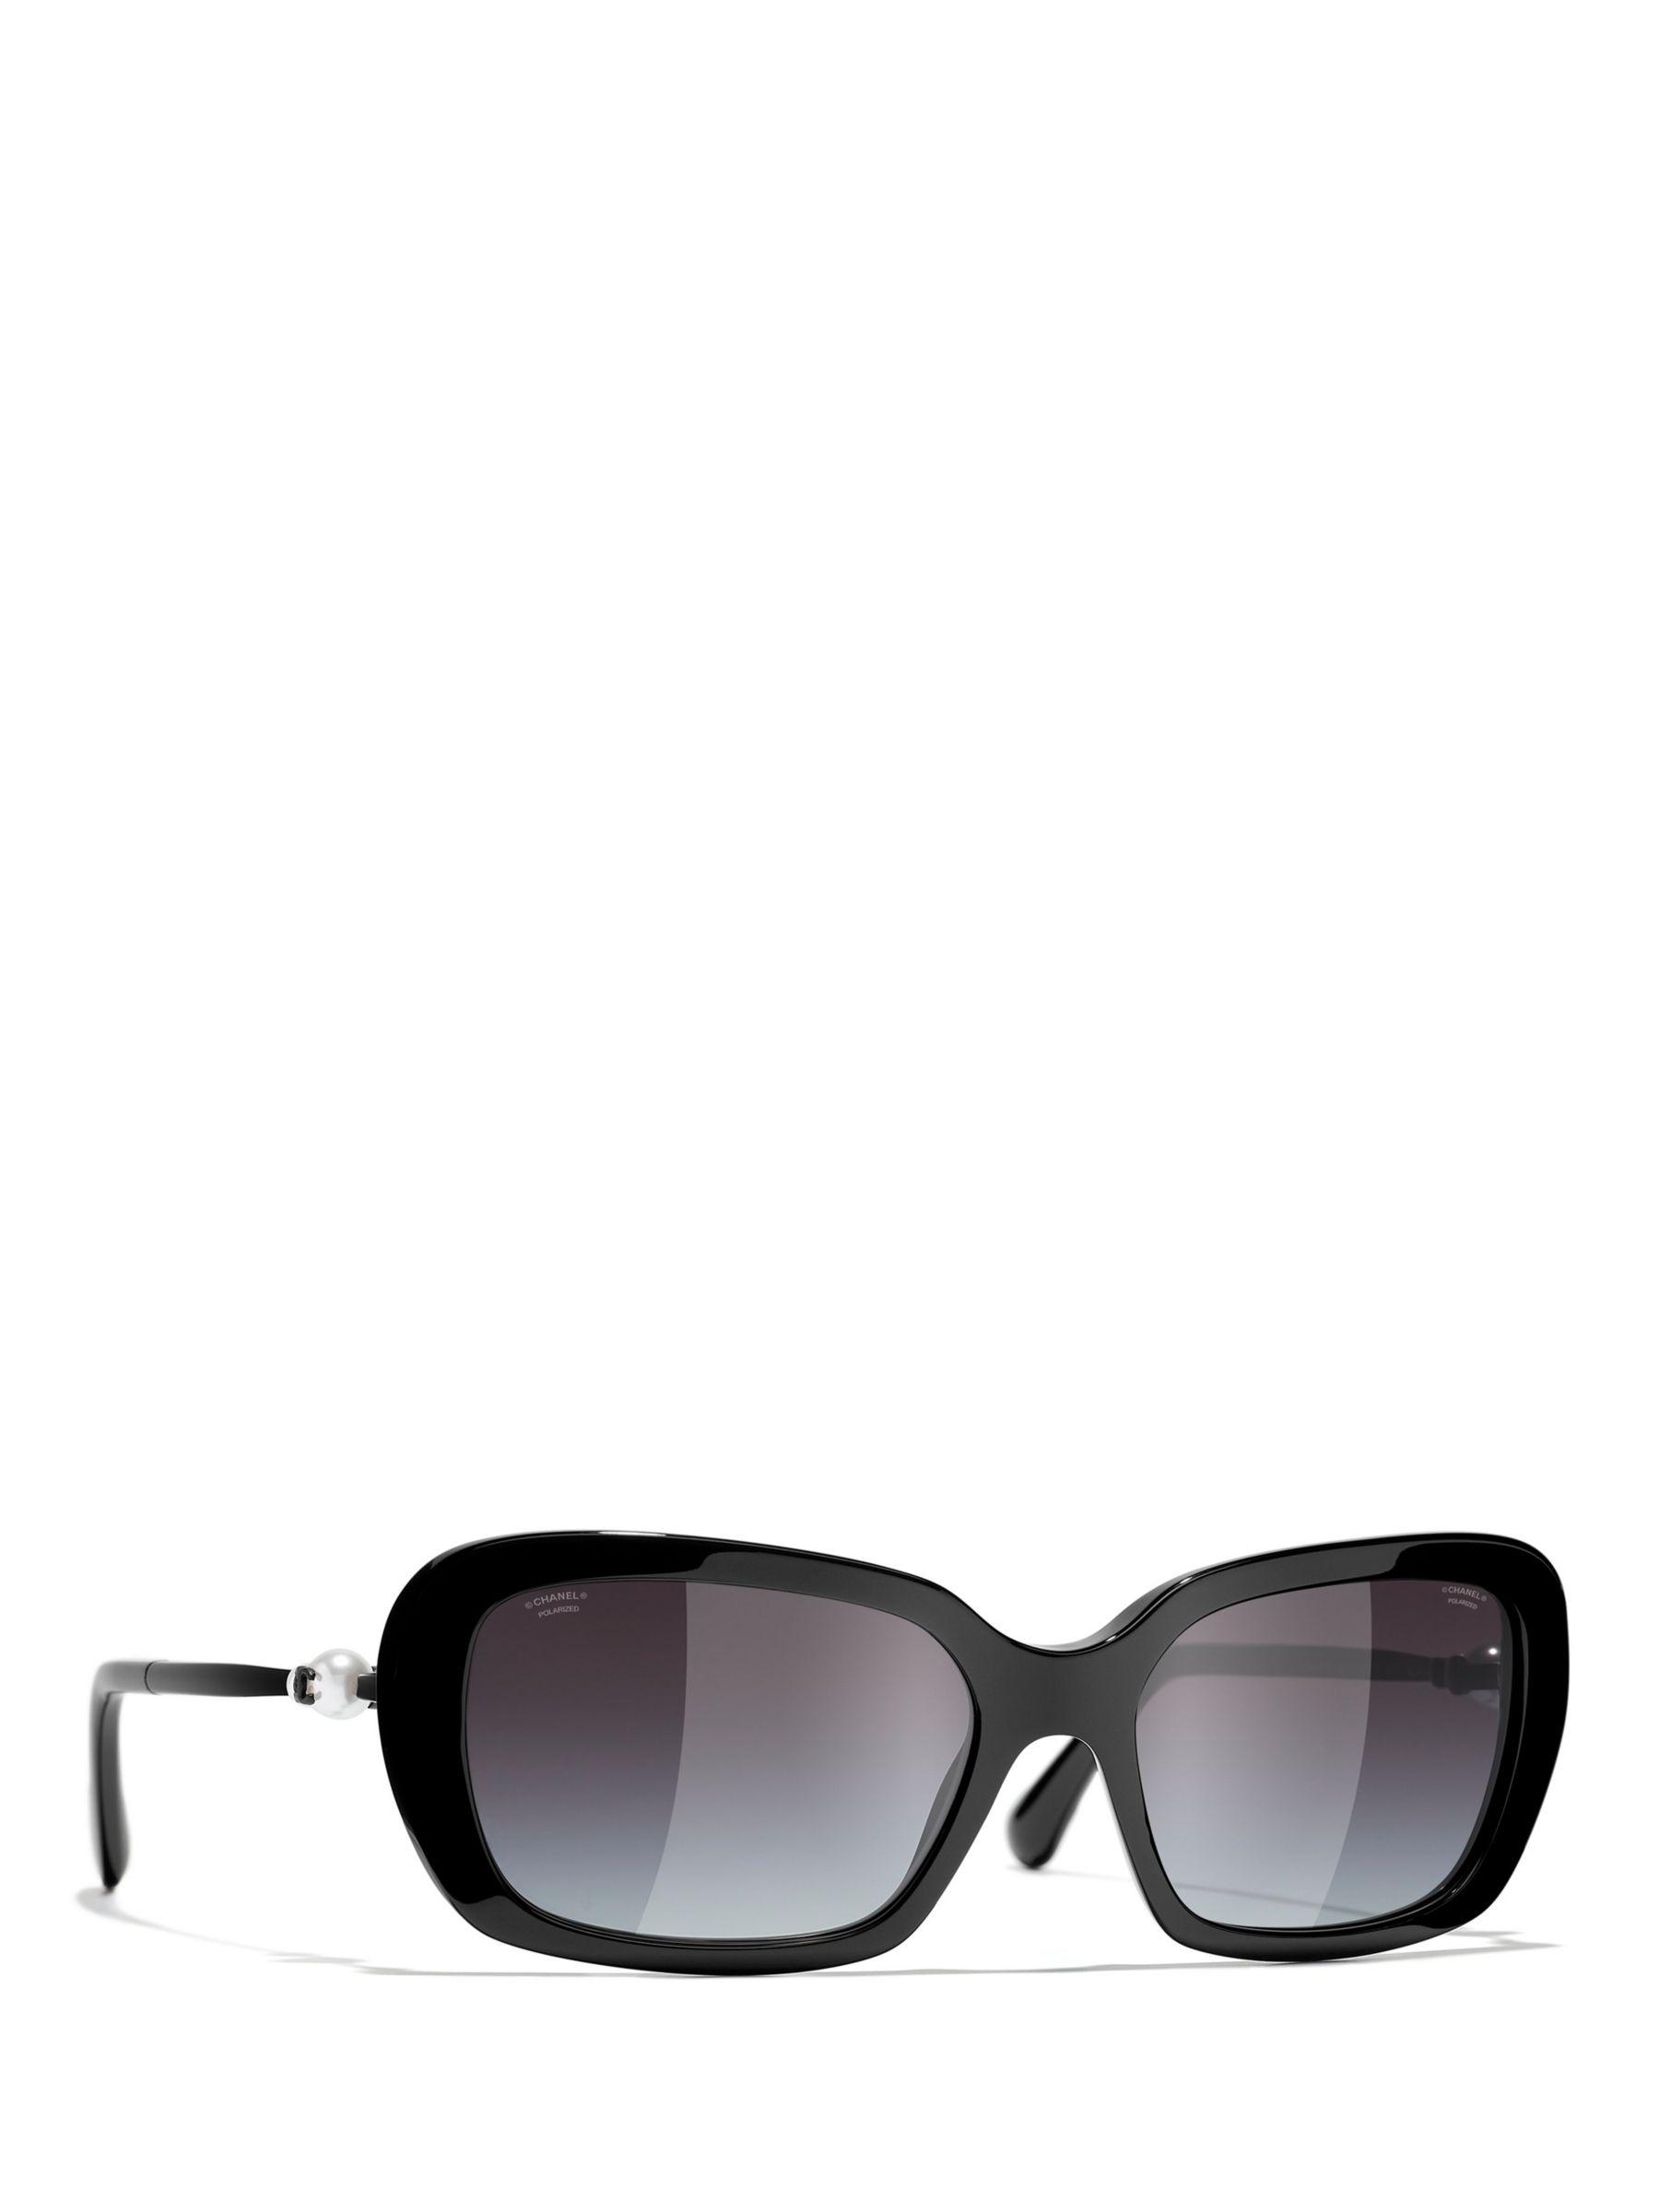 CHANEL Rectangular Sunglasses CH5447 Black/Grey at John Lewis & Partners